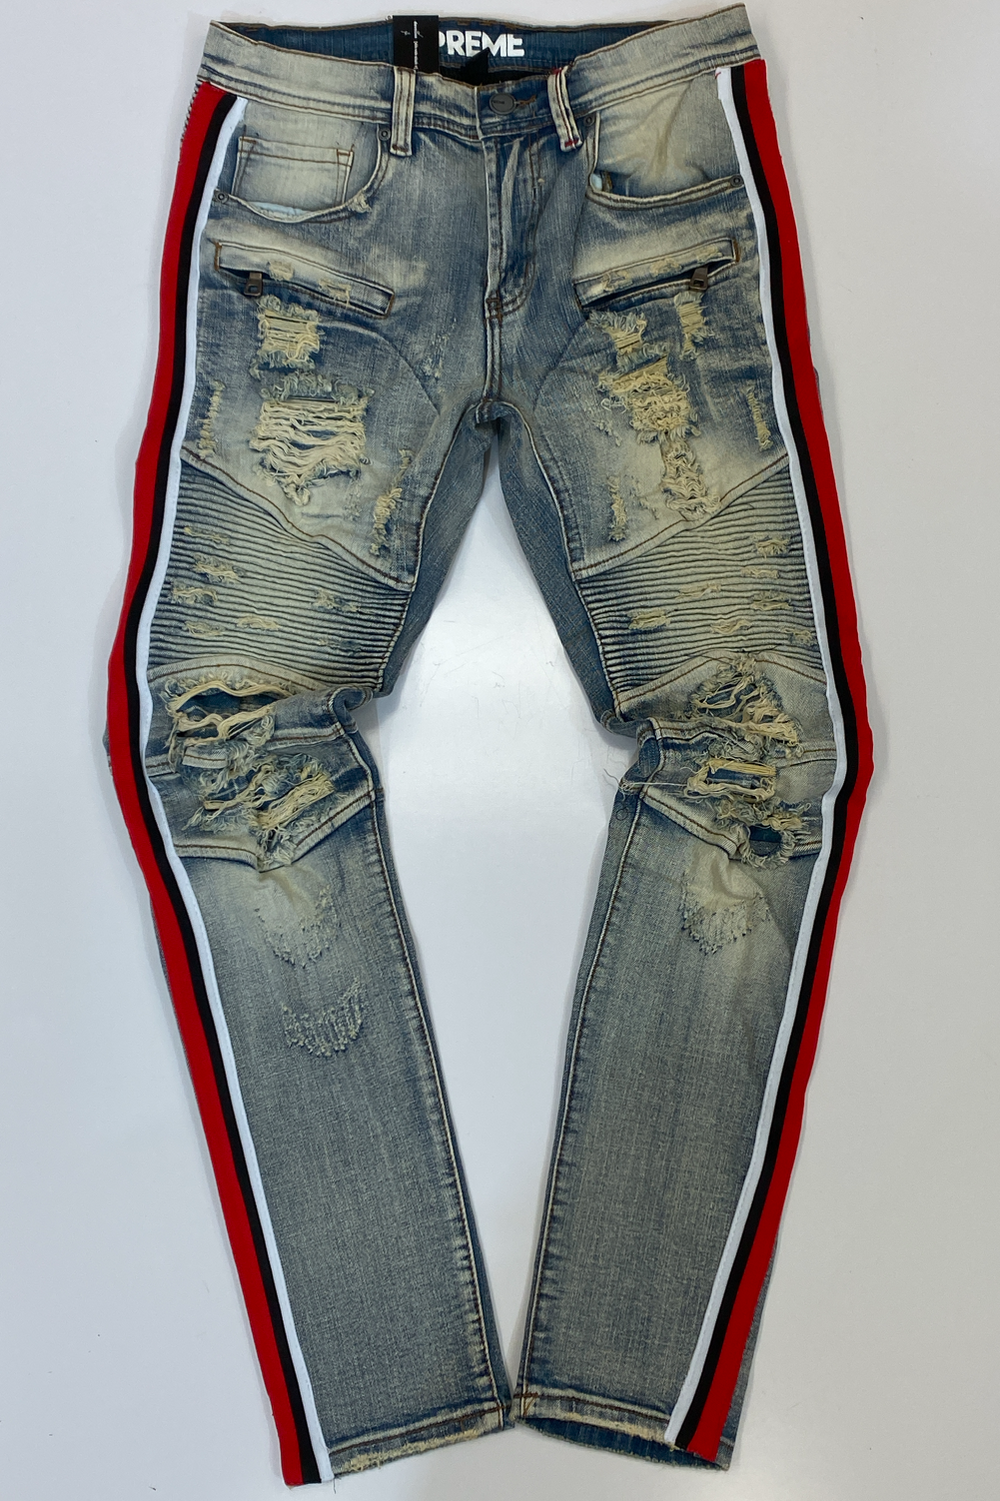 Preme- russle tape jeans